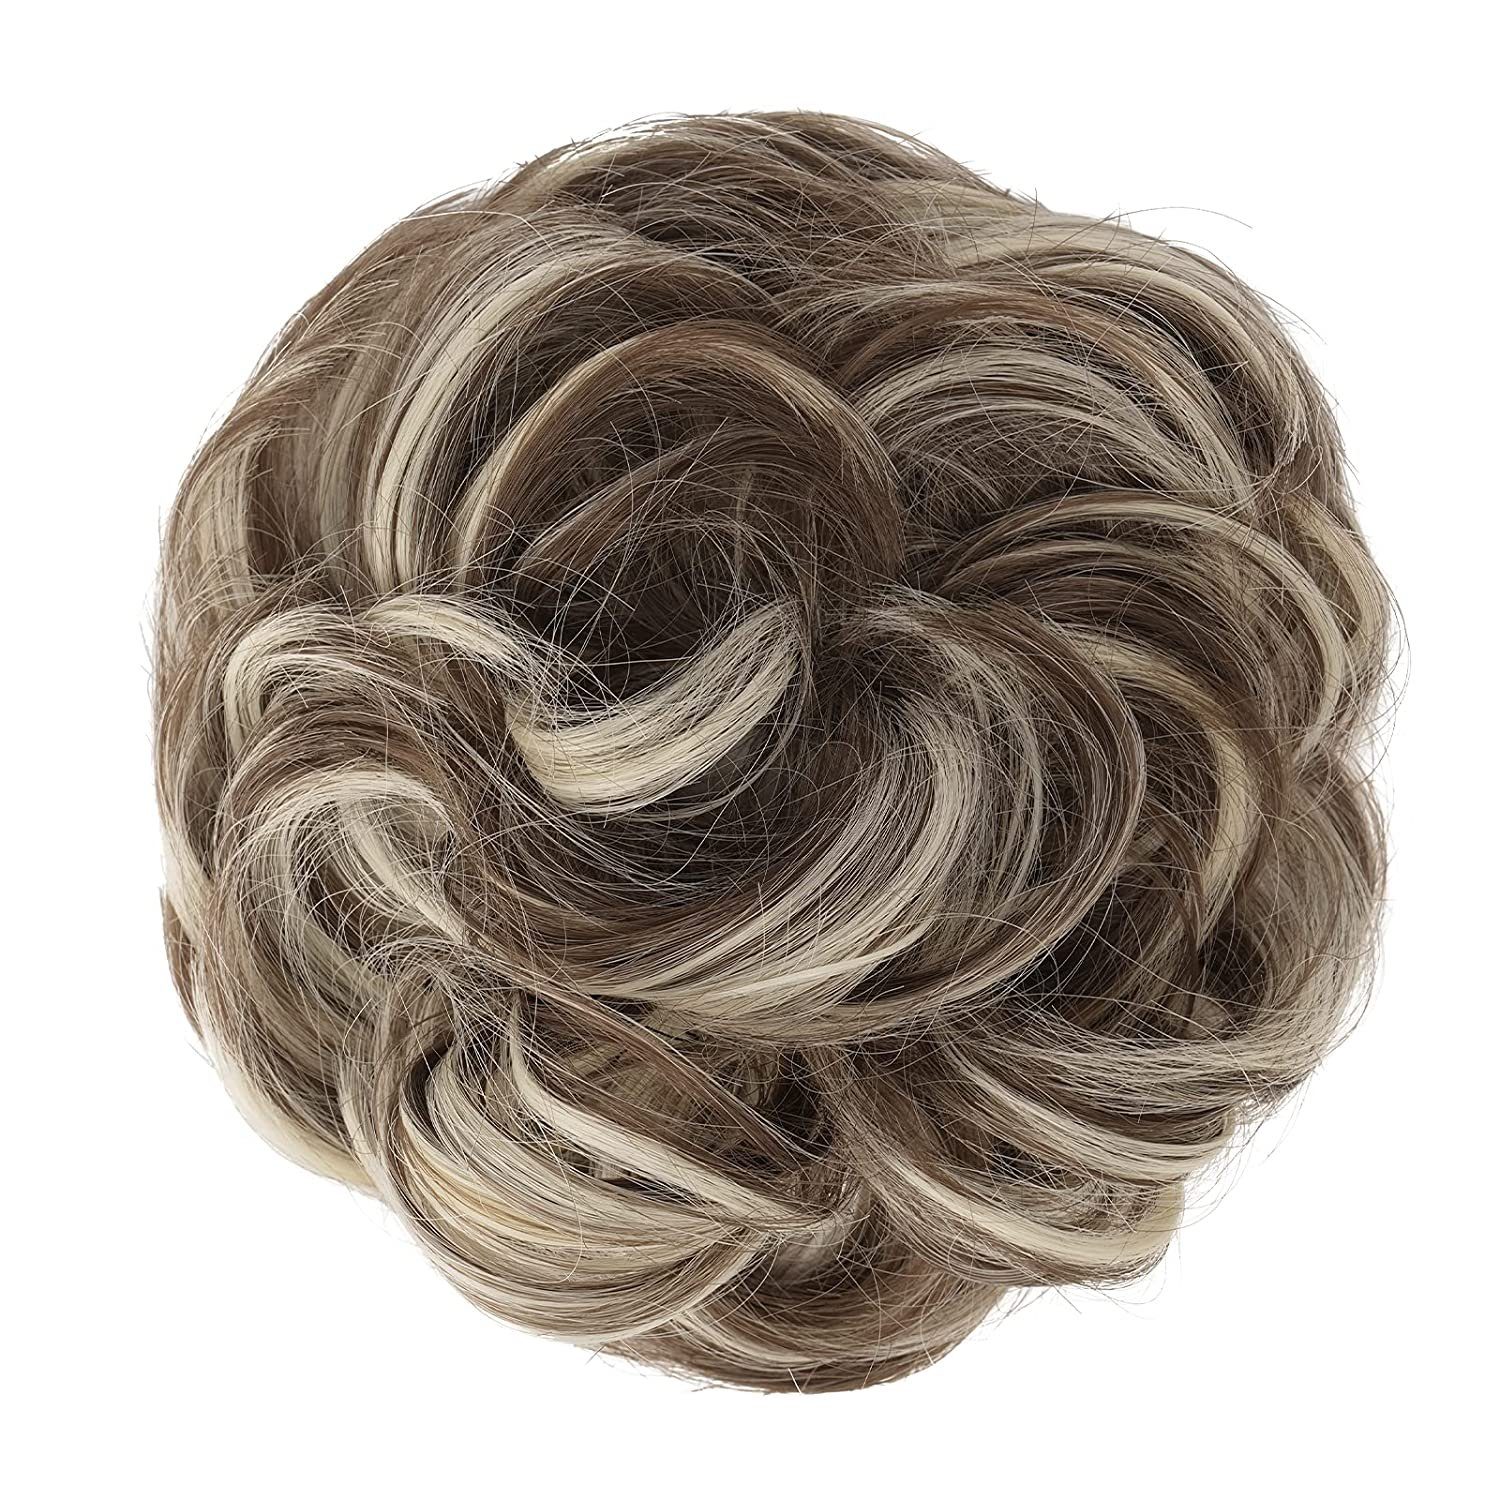 Haarknoten Pferdeschwanz Bleach Frauen Haarverlängerung Püke Gewellt Blonde Dutt Brown Golden Kunsthaar-Extension für